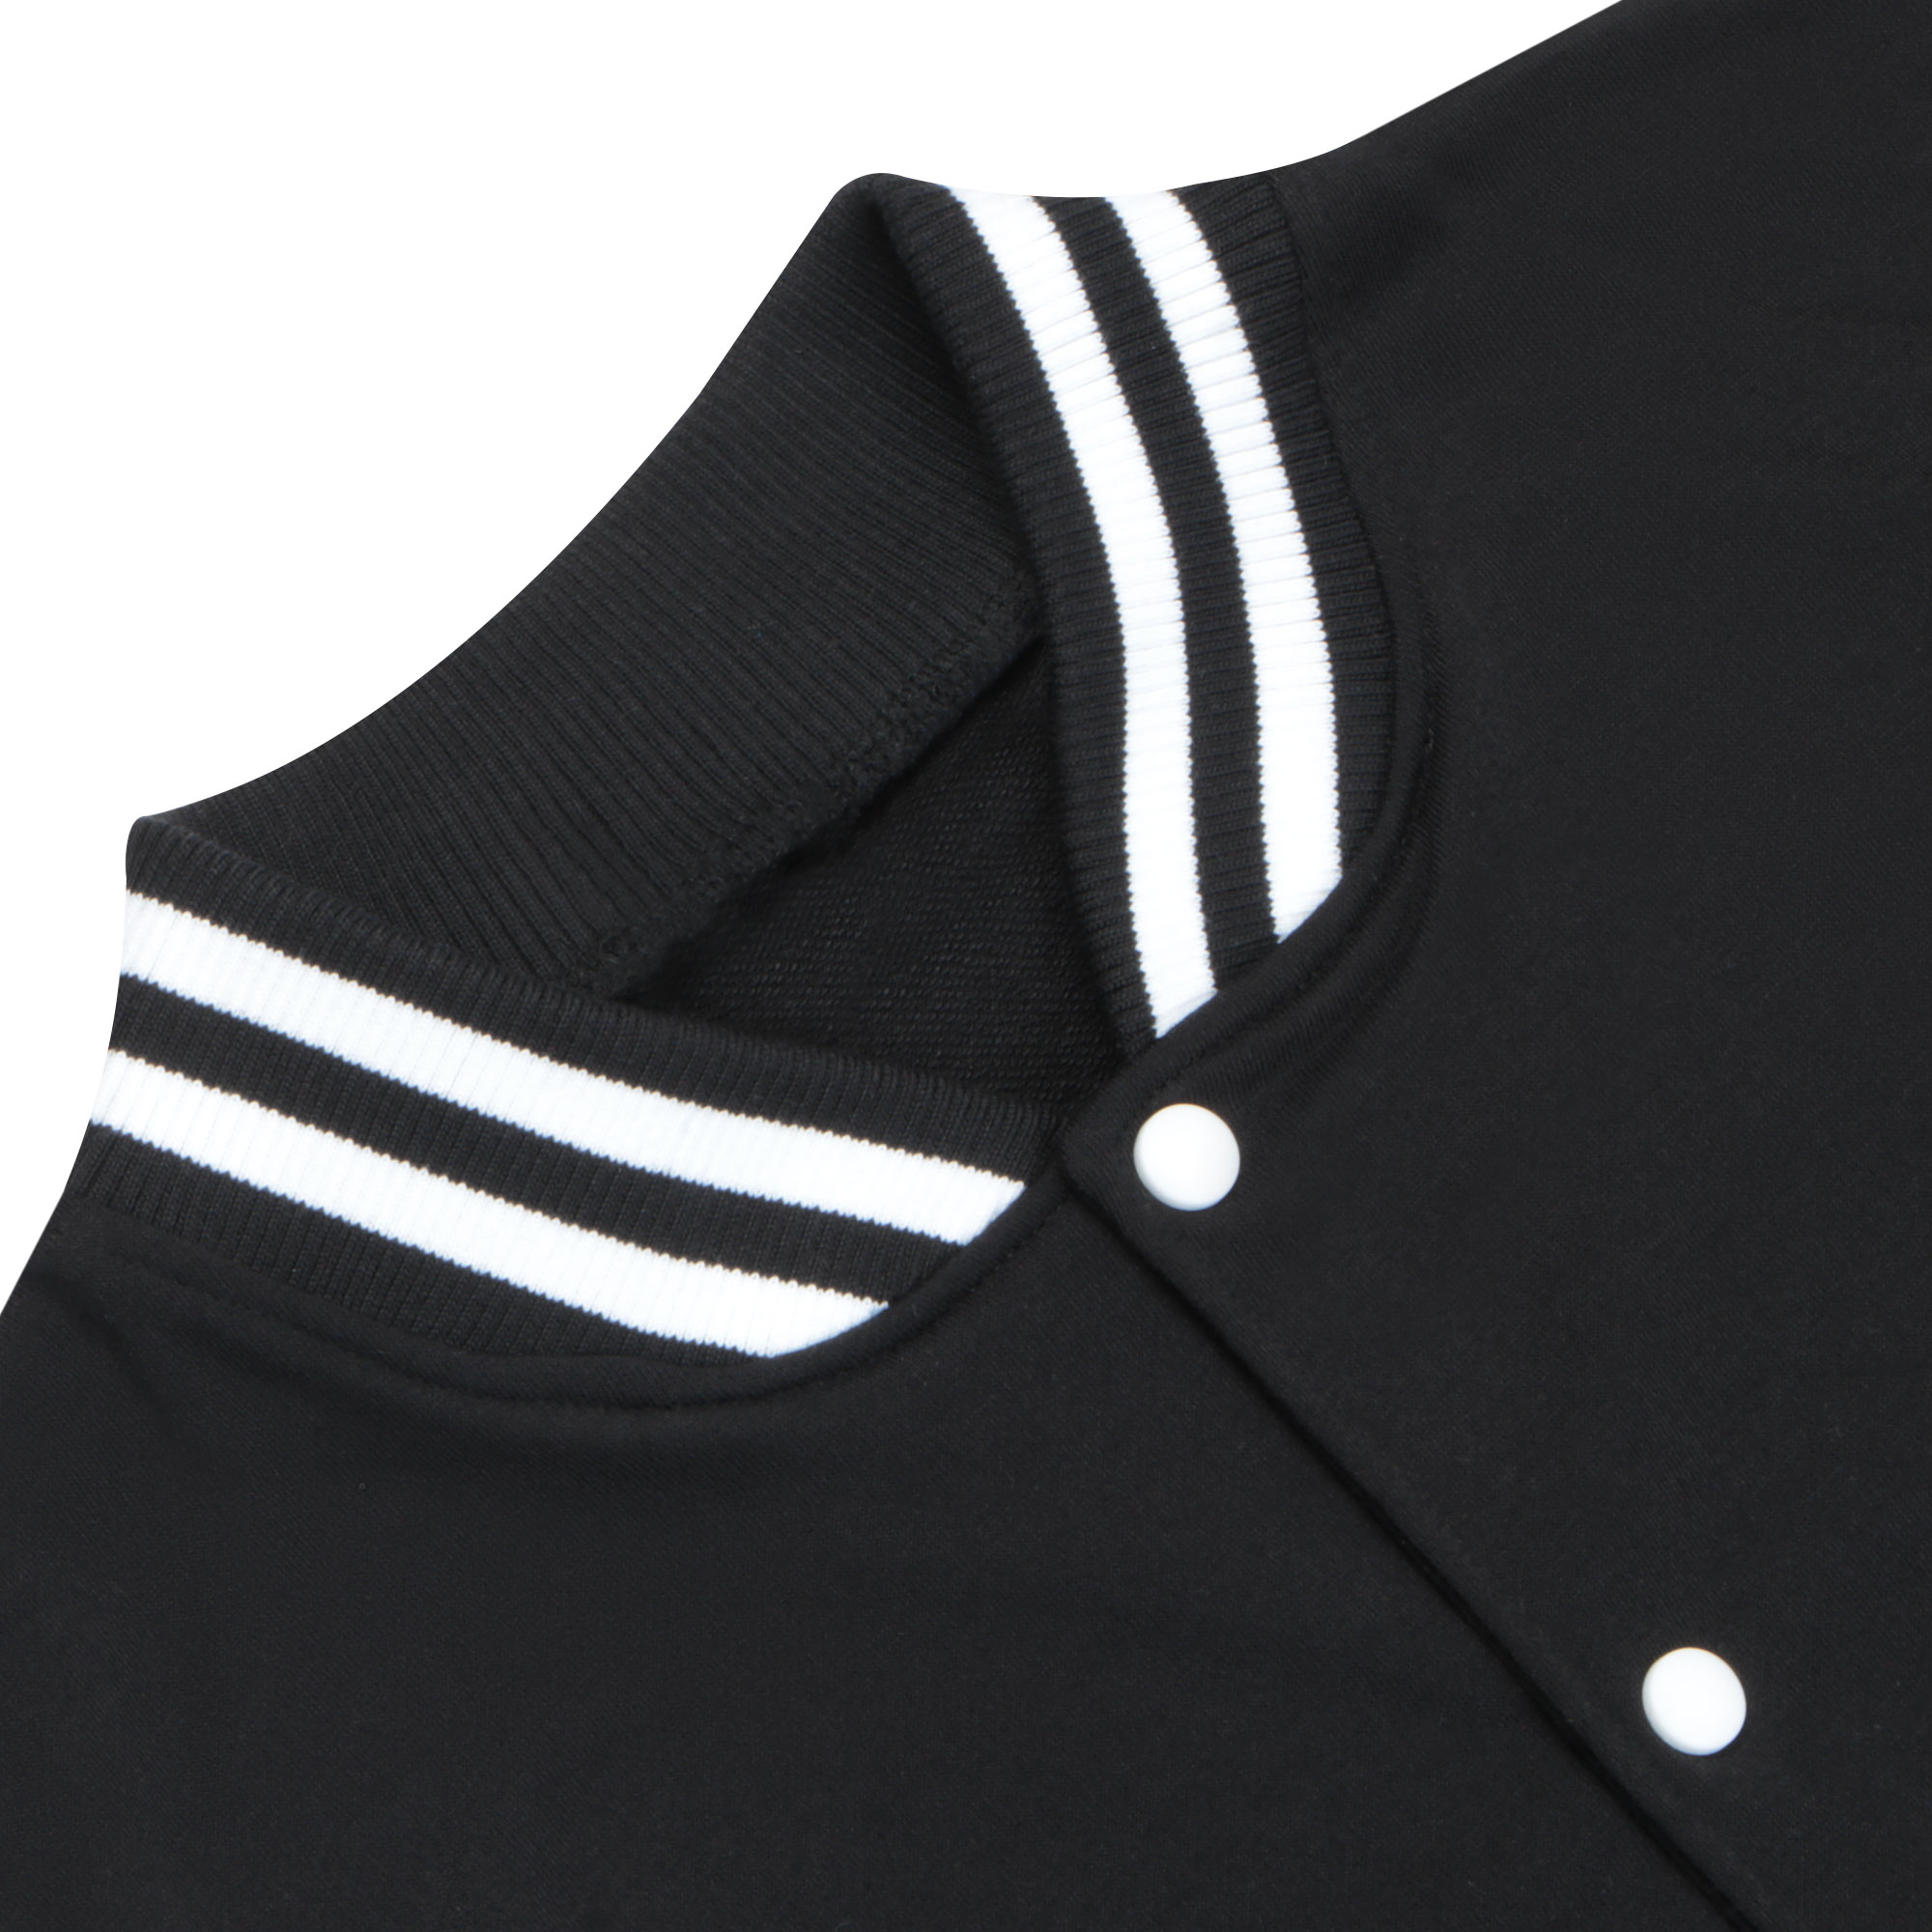 Бомбер Garment чёрный/белый XXL полиэстер, цвет черный, размер XXL - фото 4